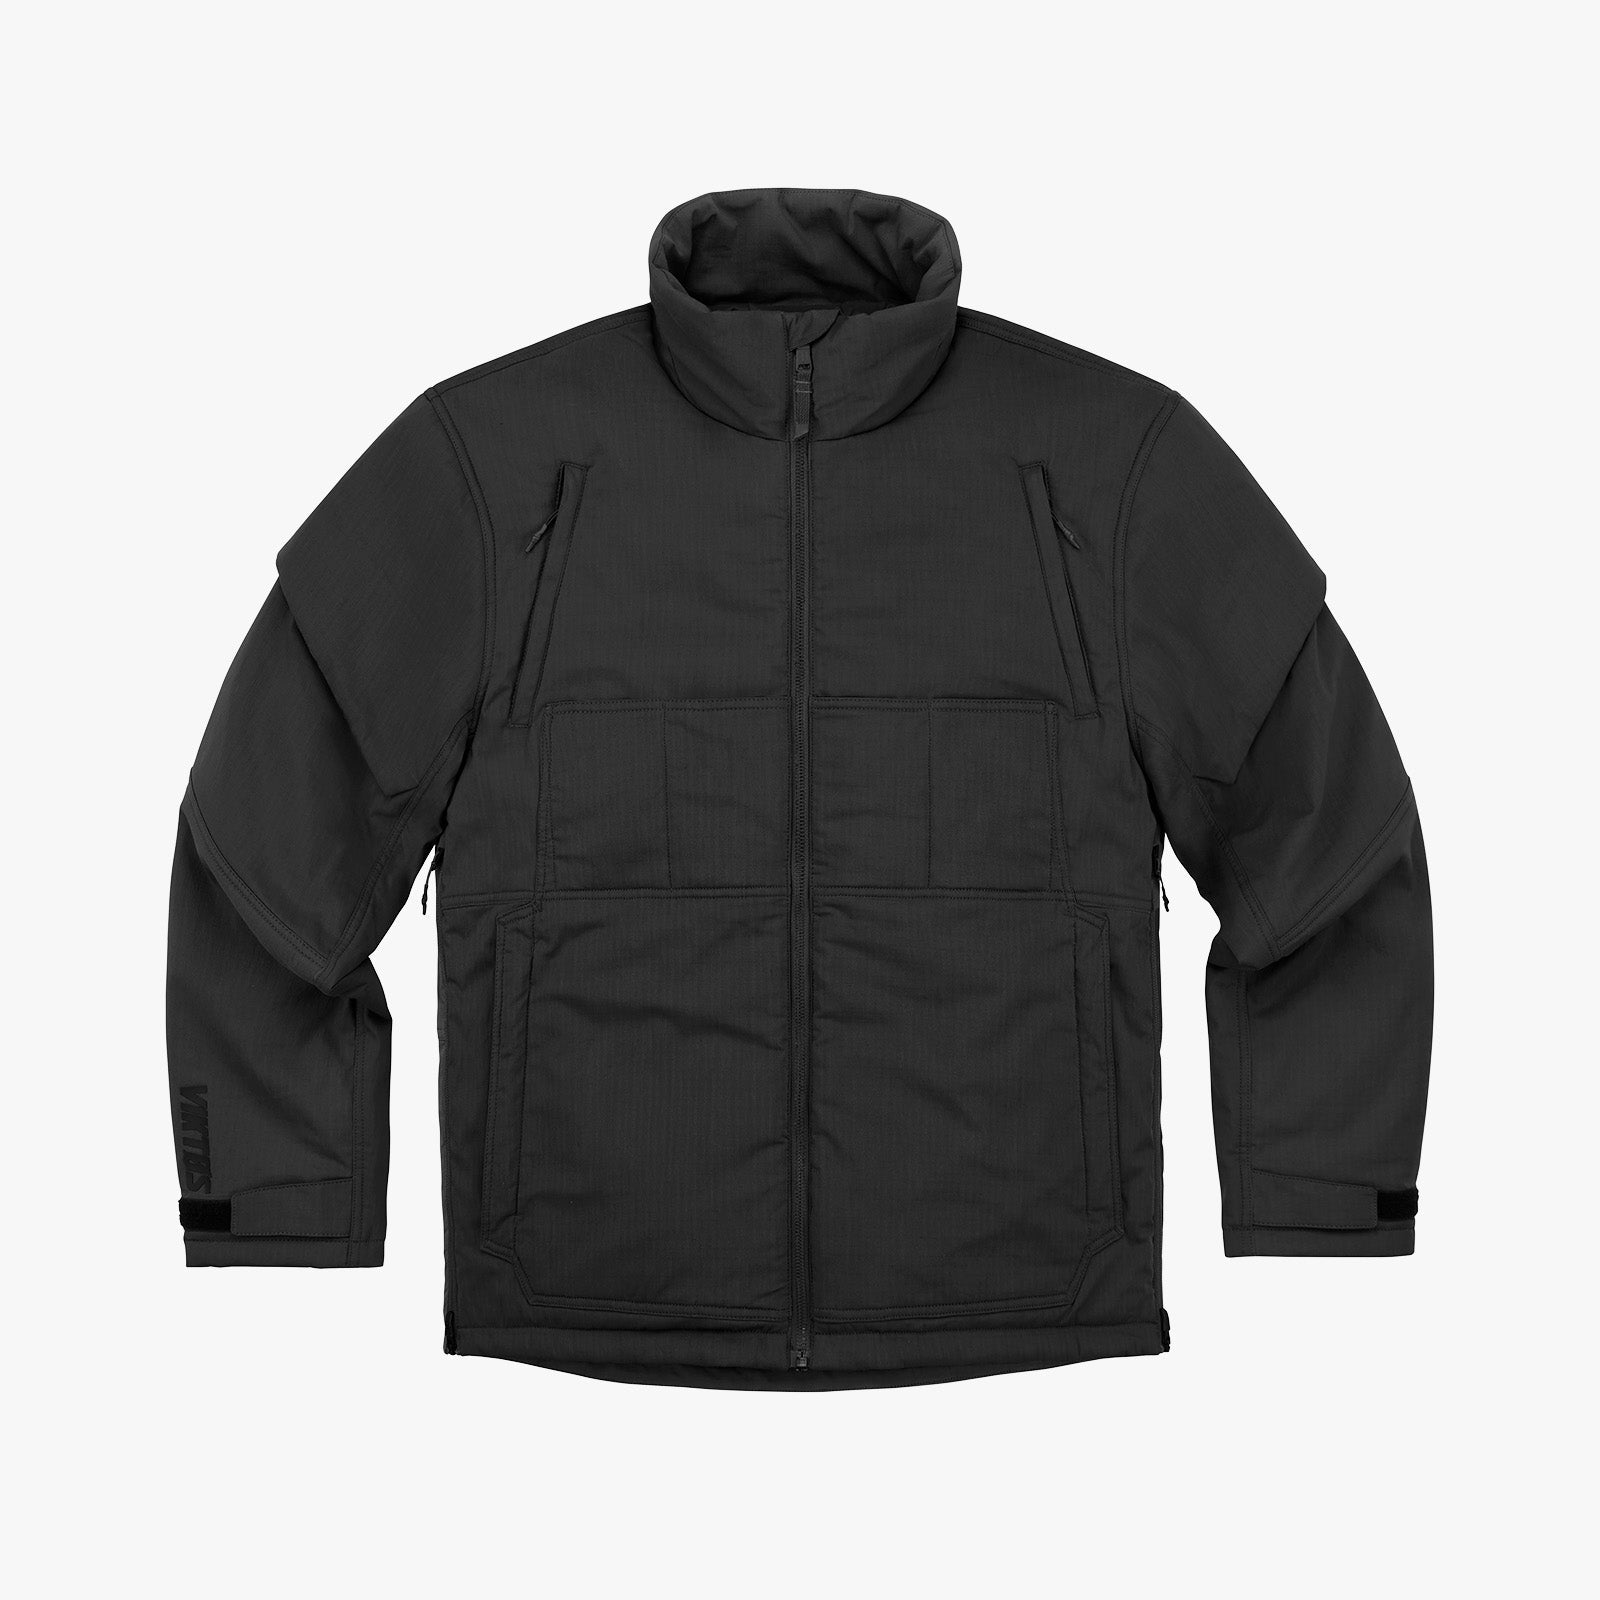 VIKTOS Farthermost Jacket Black Extra Small Tactical Distributors Ltd New Zealand